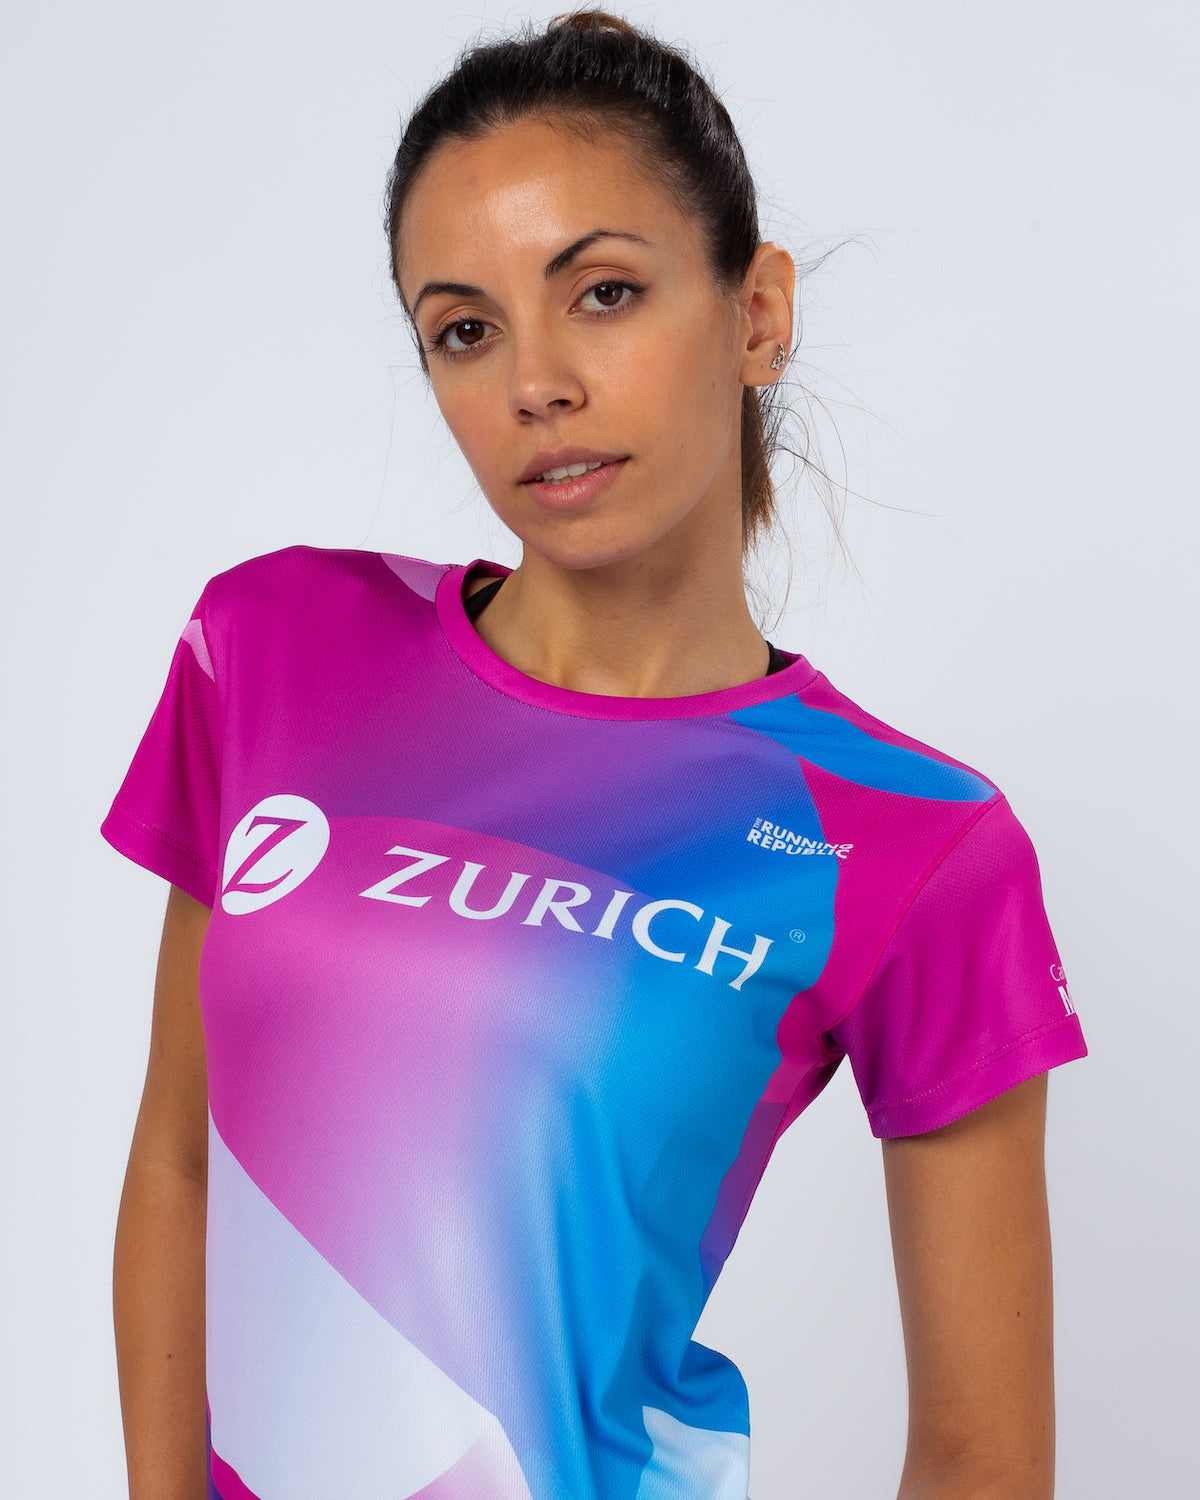 Camiseta Zurich Insurance Women's Race performance